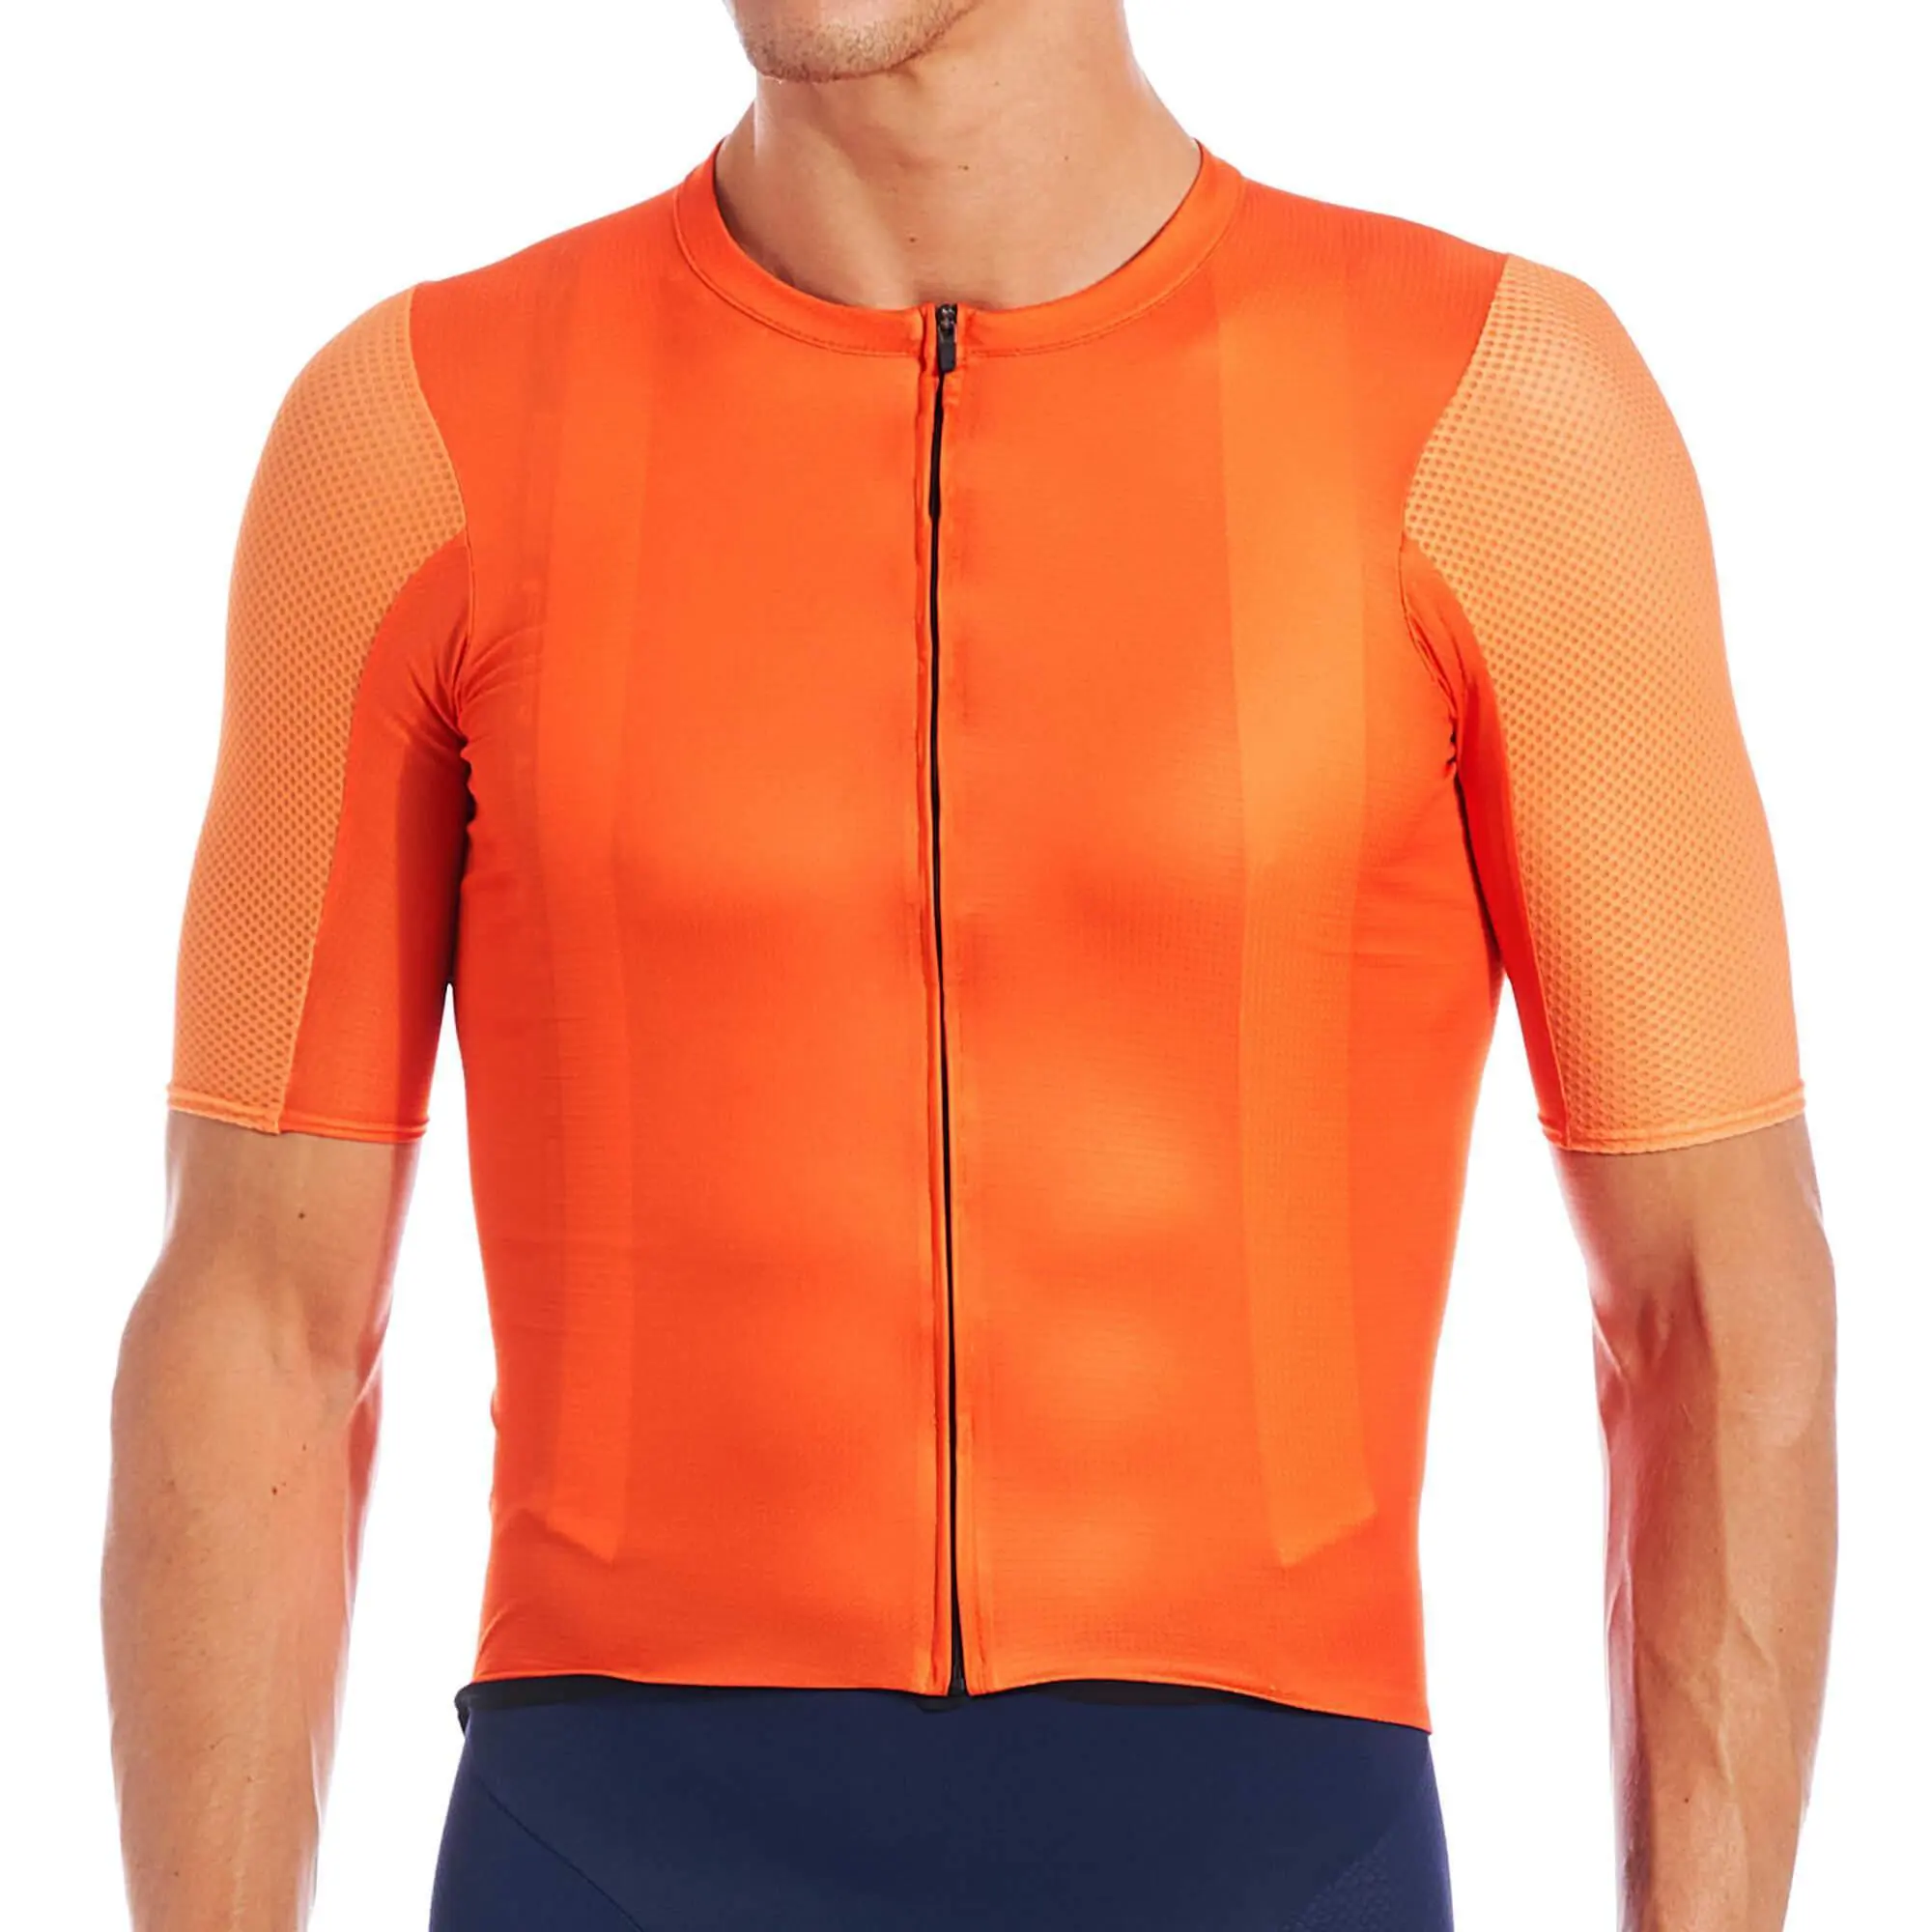 Time aero roupas de bicicleta pro, cores sólidas, tecido de spandex, mangas curtas, foco personalizado, meninos, camisa de ciclismo